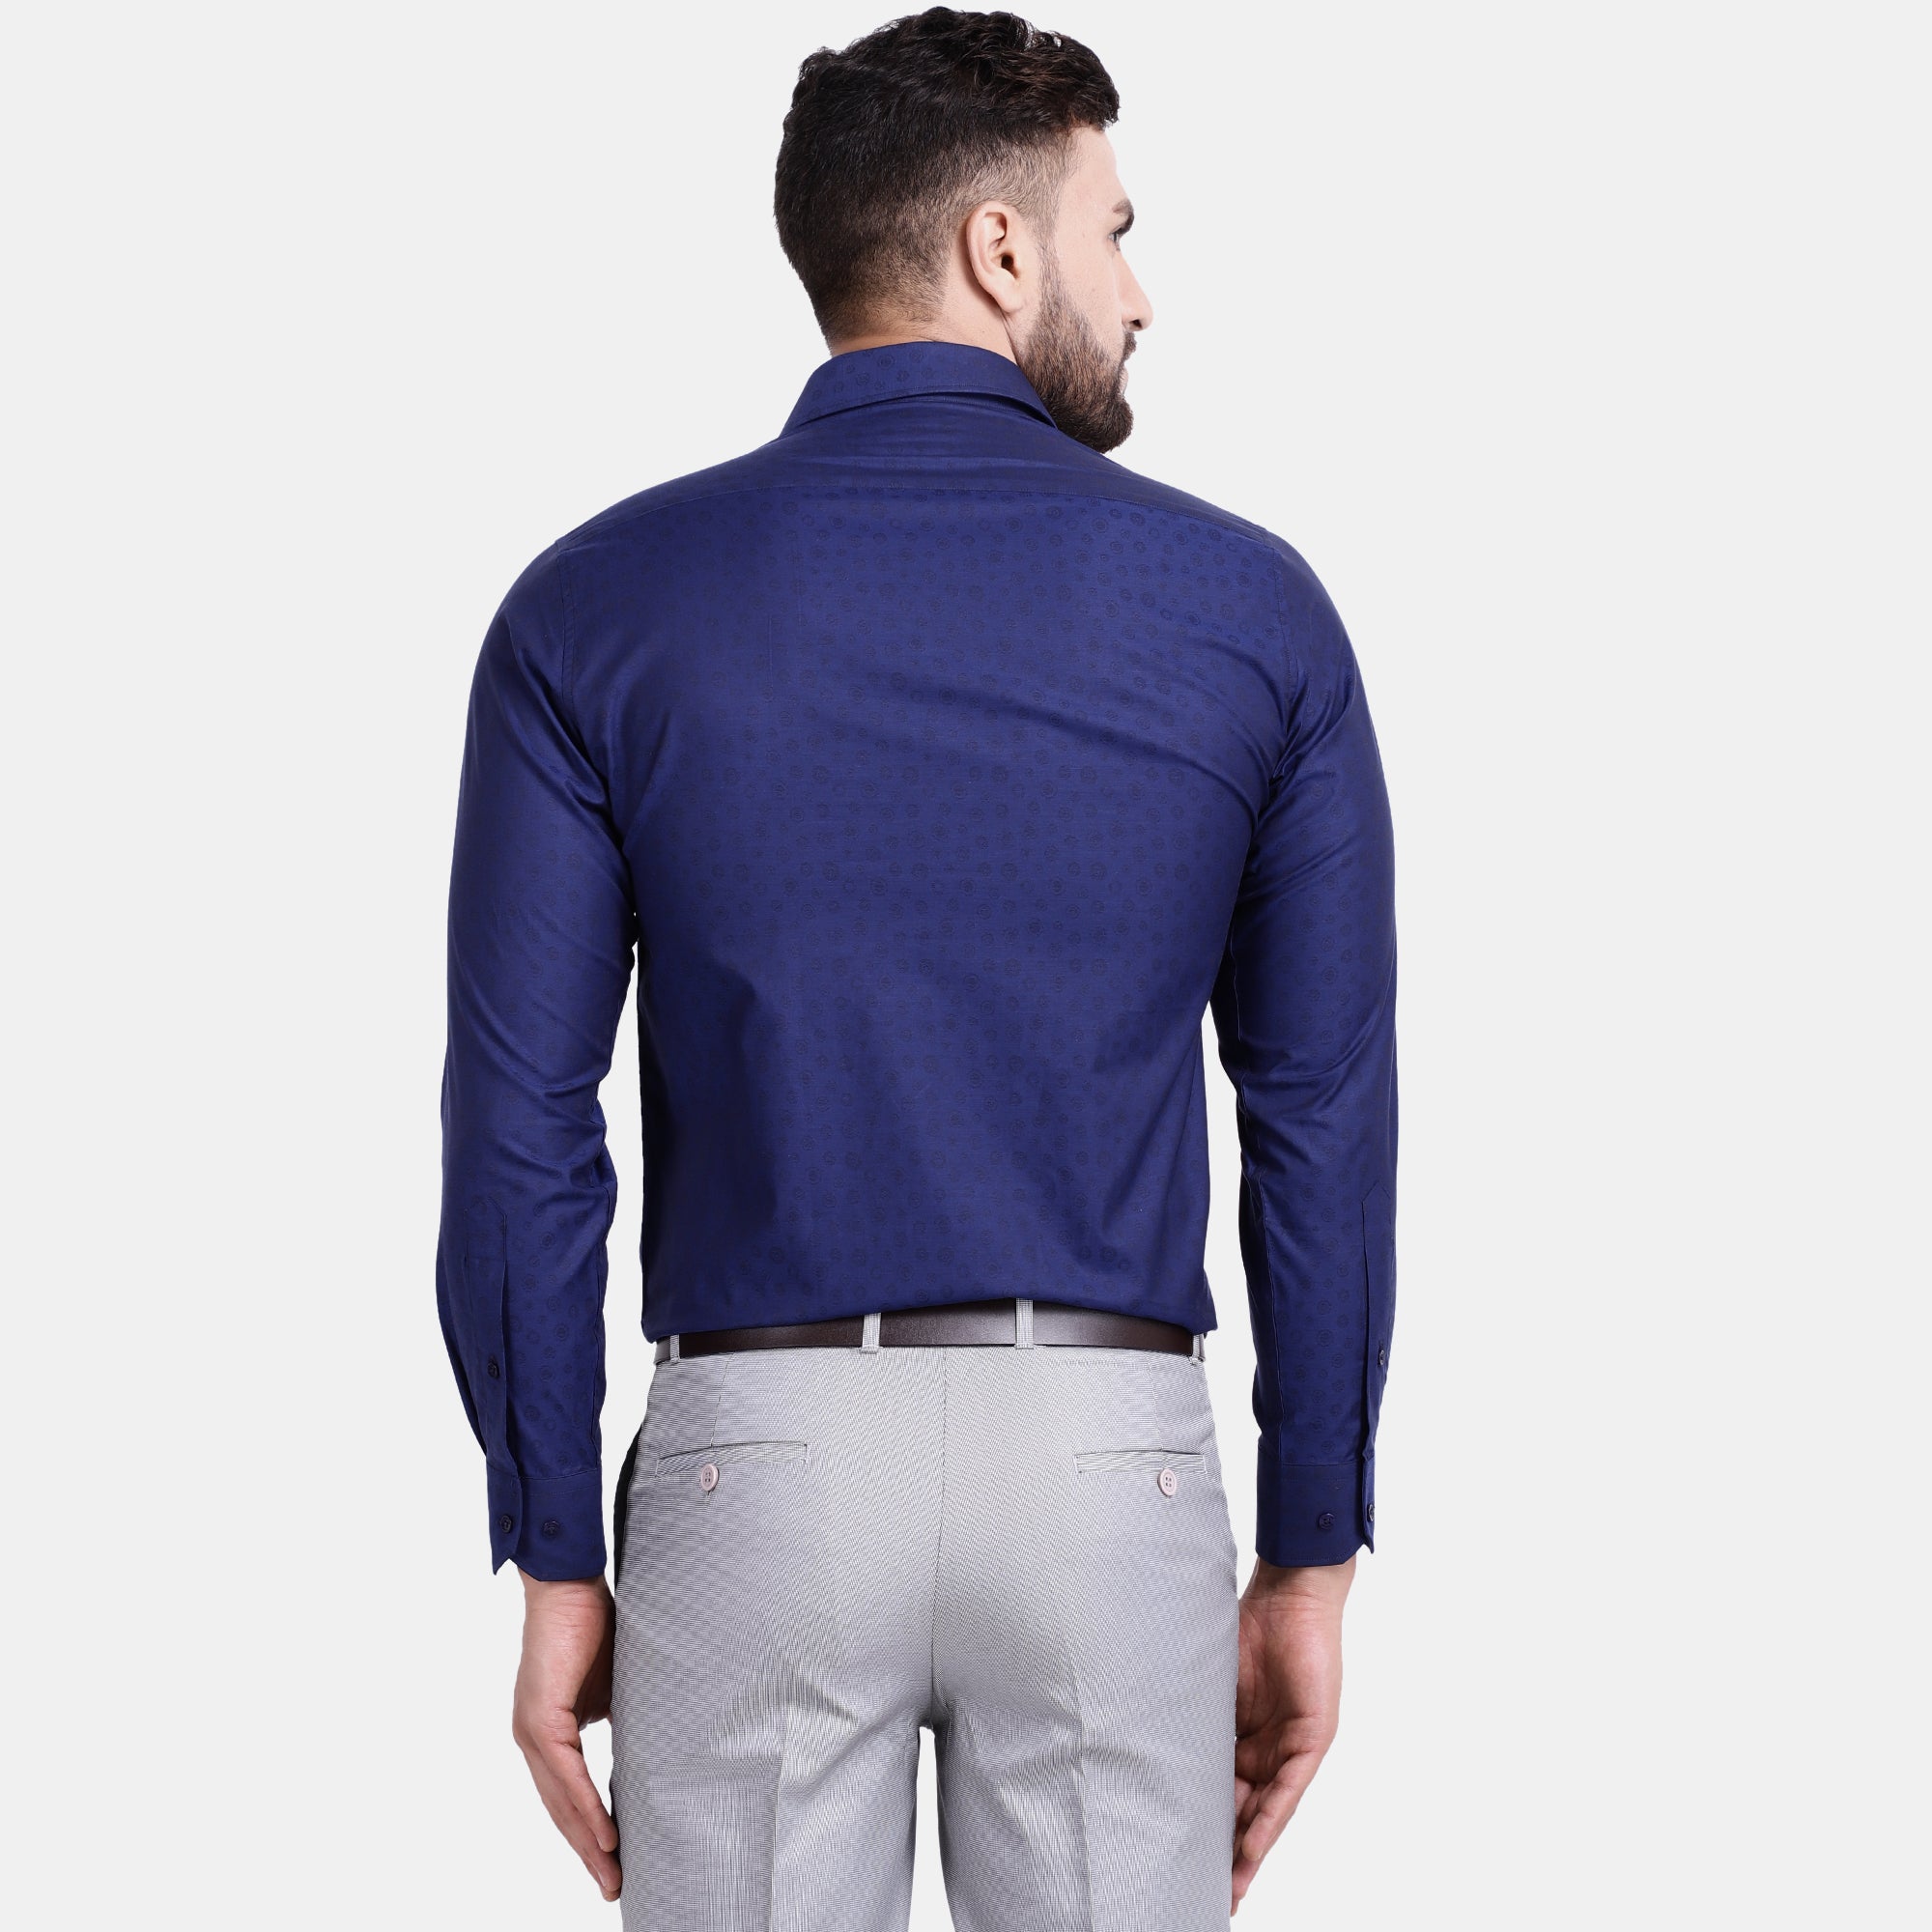 Men's Luthai Supima Mercerised Cotton Subtle Circle Textured Jacquard Design Regular Fit Shirt